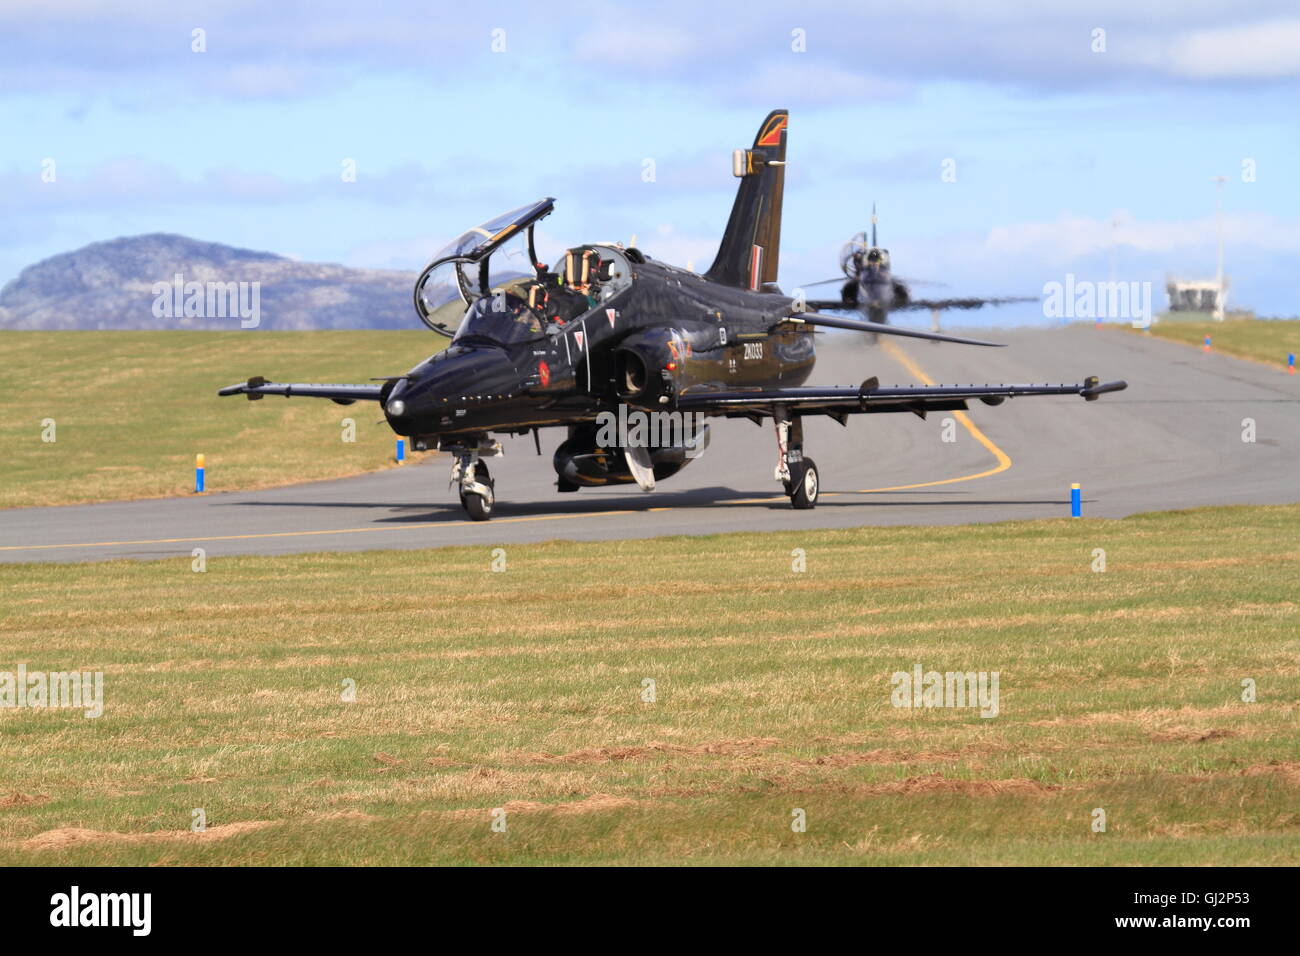 Royal Air Force Hawk training aircraft taxy to the main runway at RAF Valley ahead of a training flight. Stock Photo